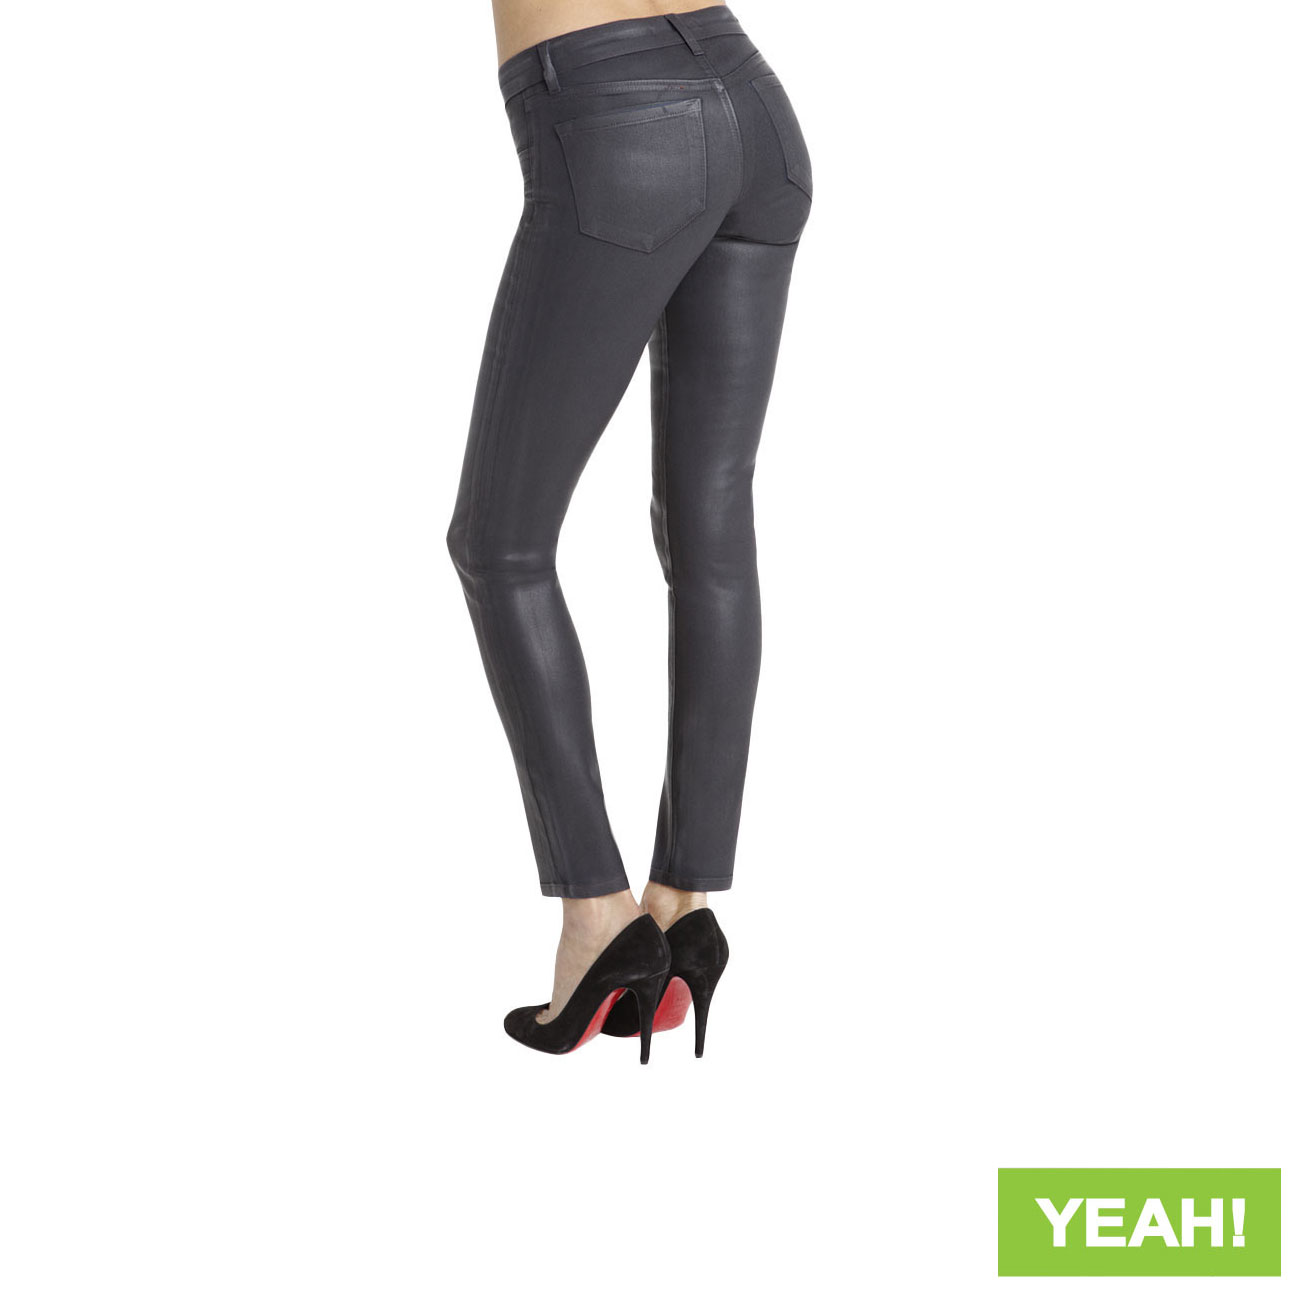 J Brand Women's Coated Super Skinny Low-Rise Black Legging Jeans